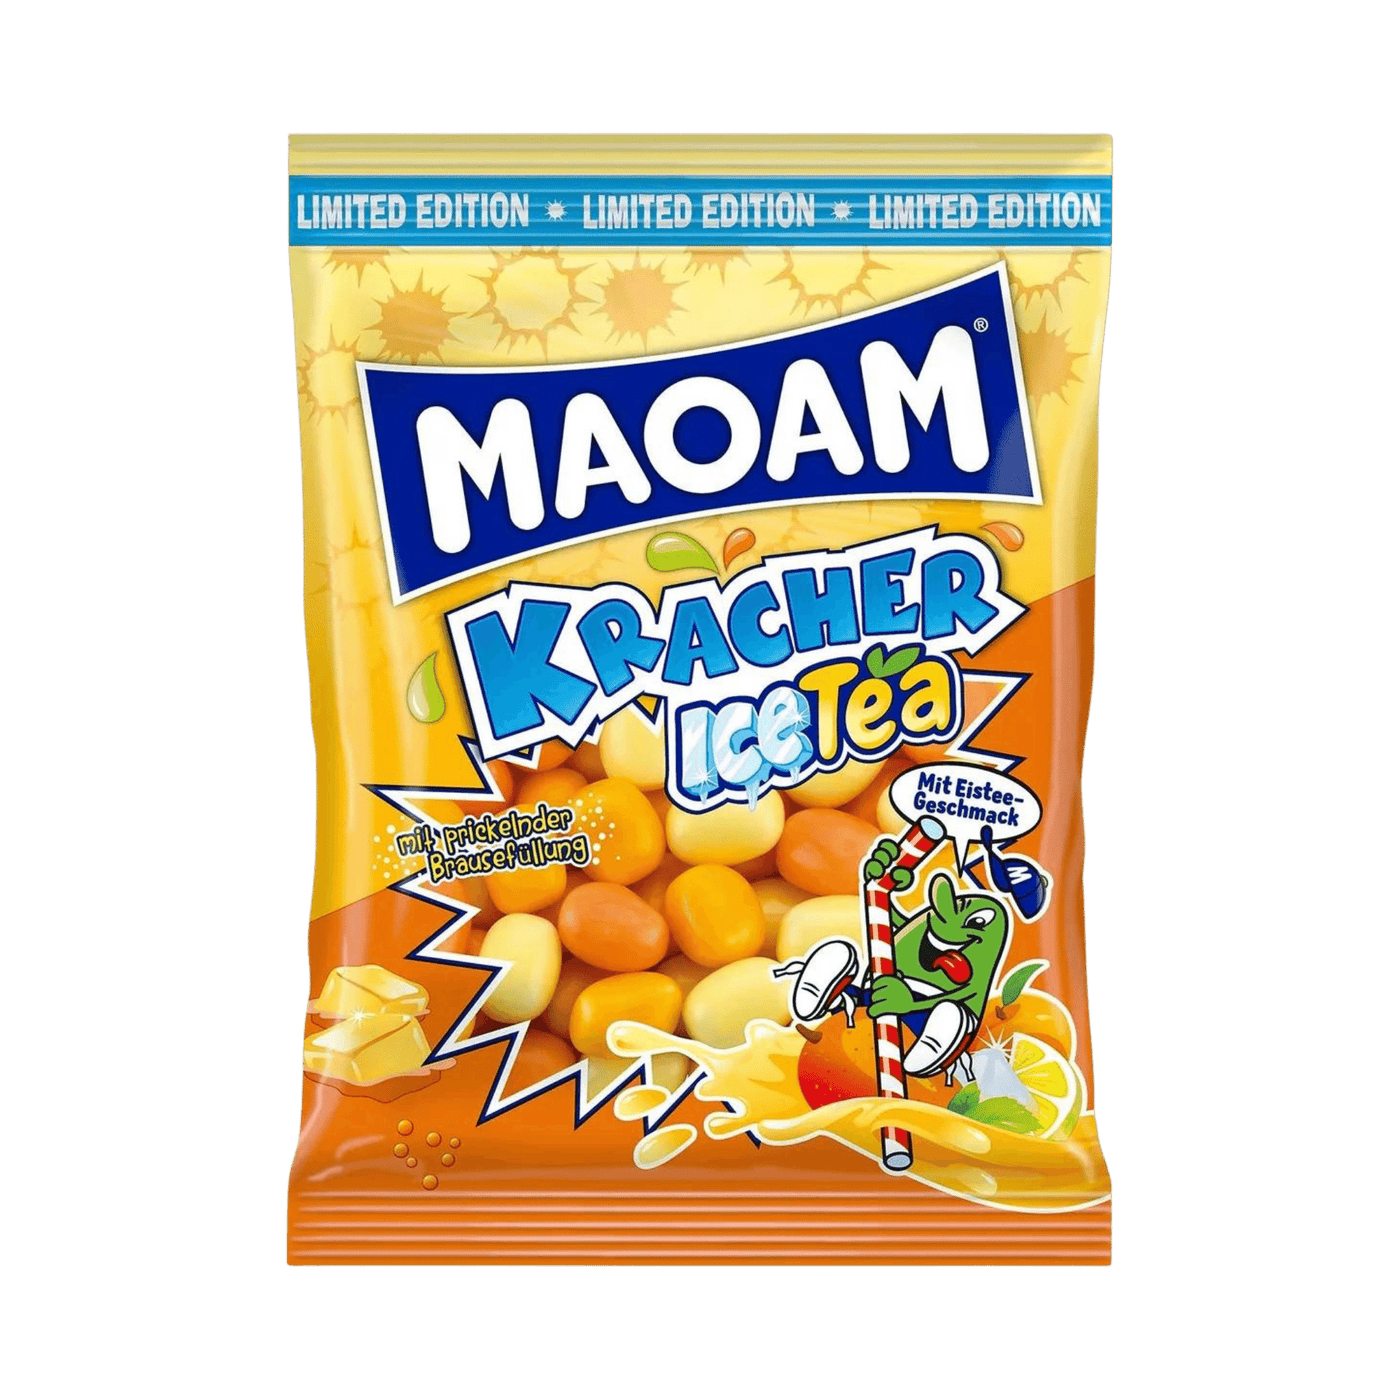 Maoam Kracher Ice Tea - Germany